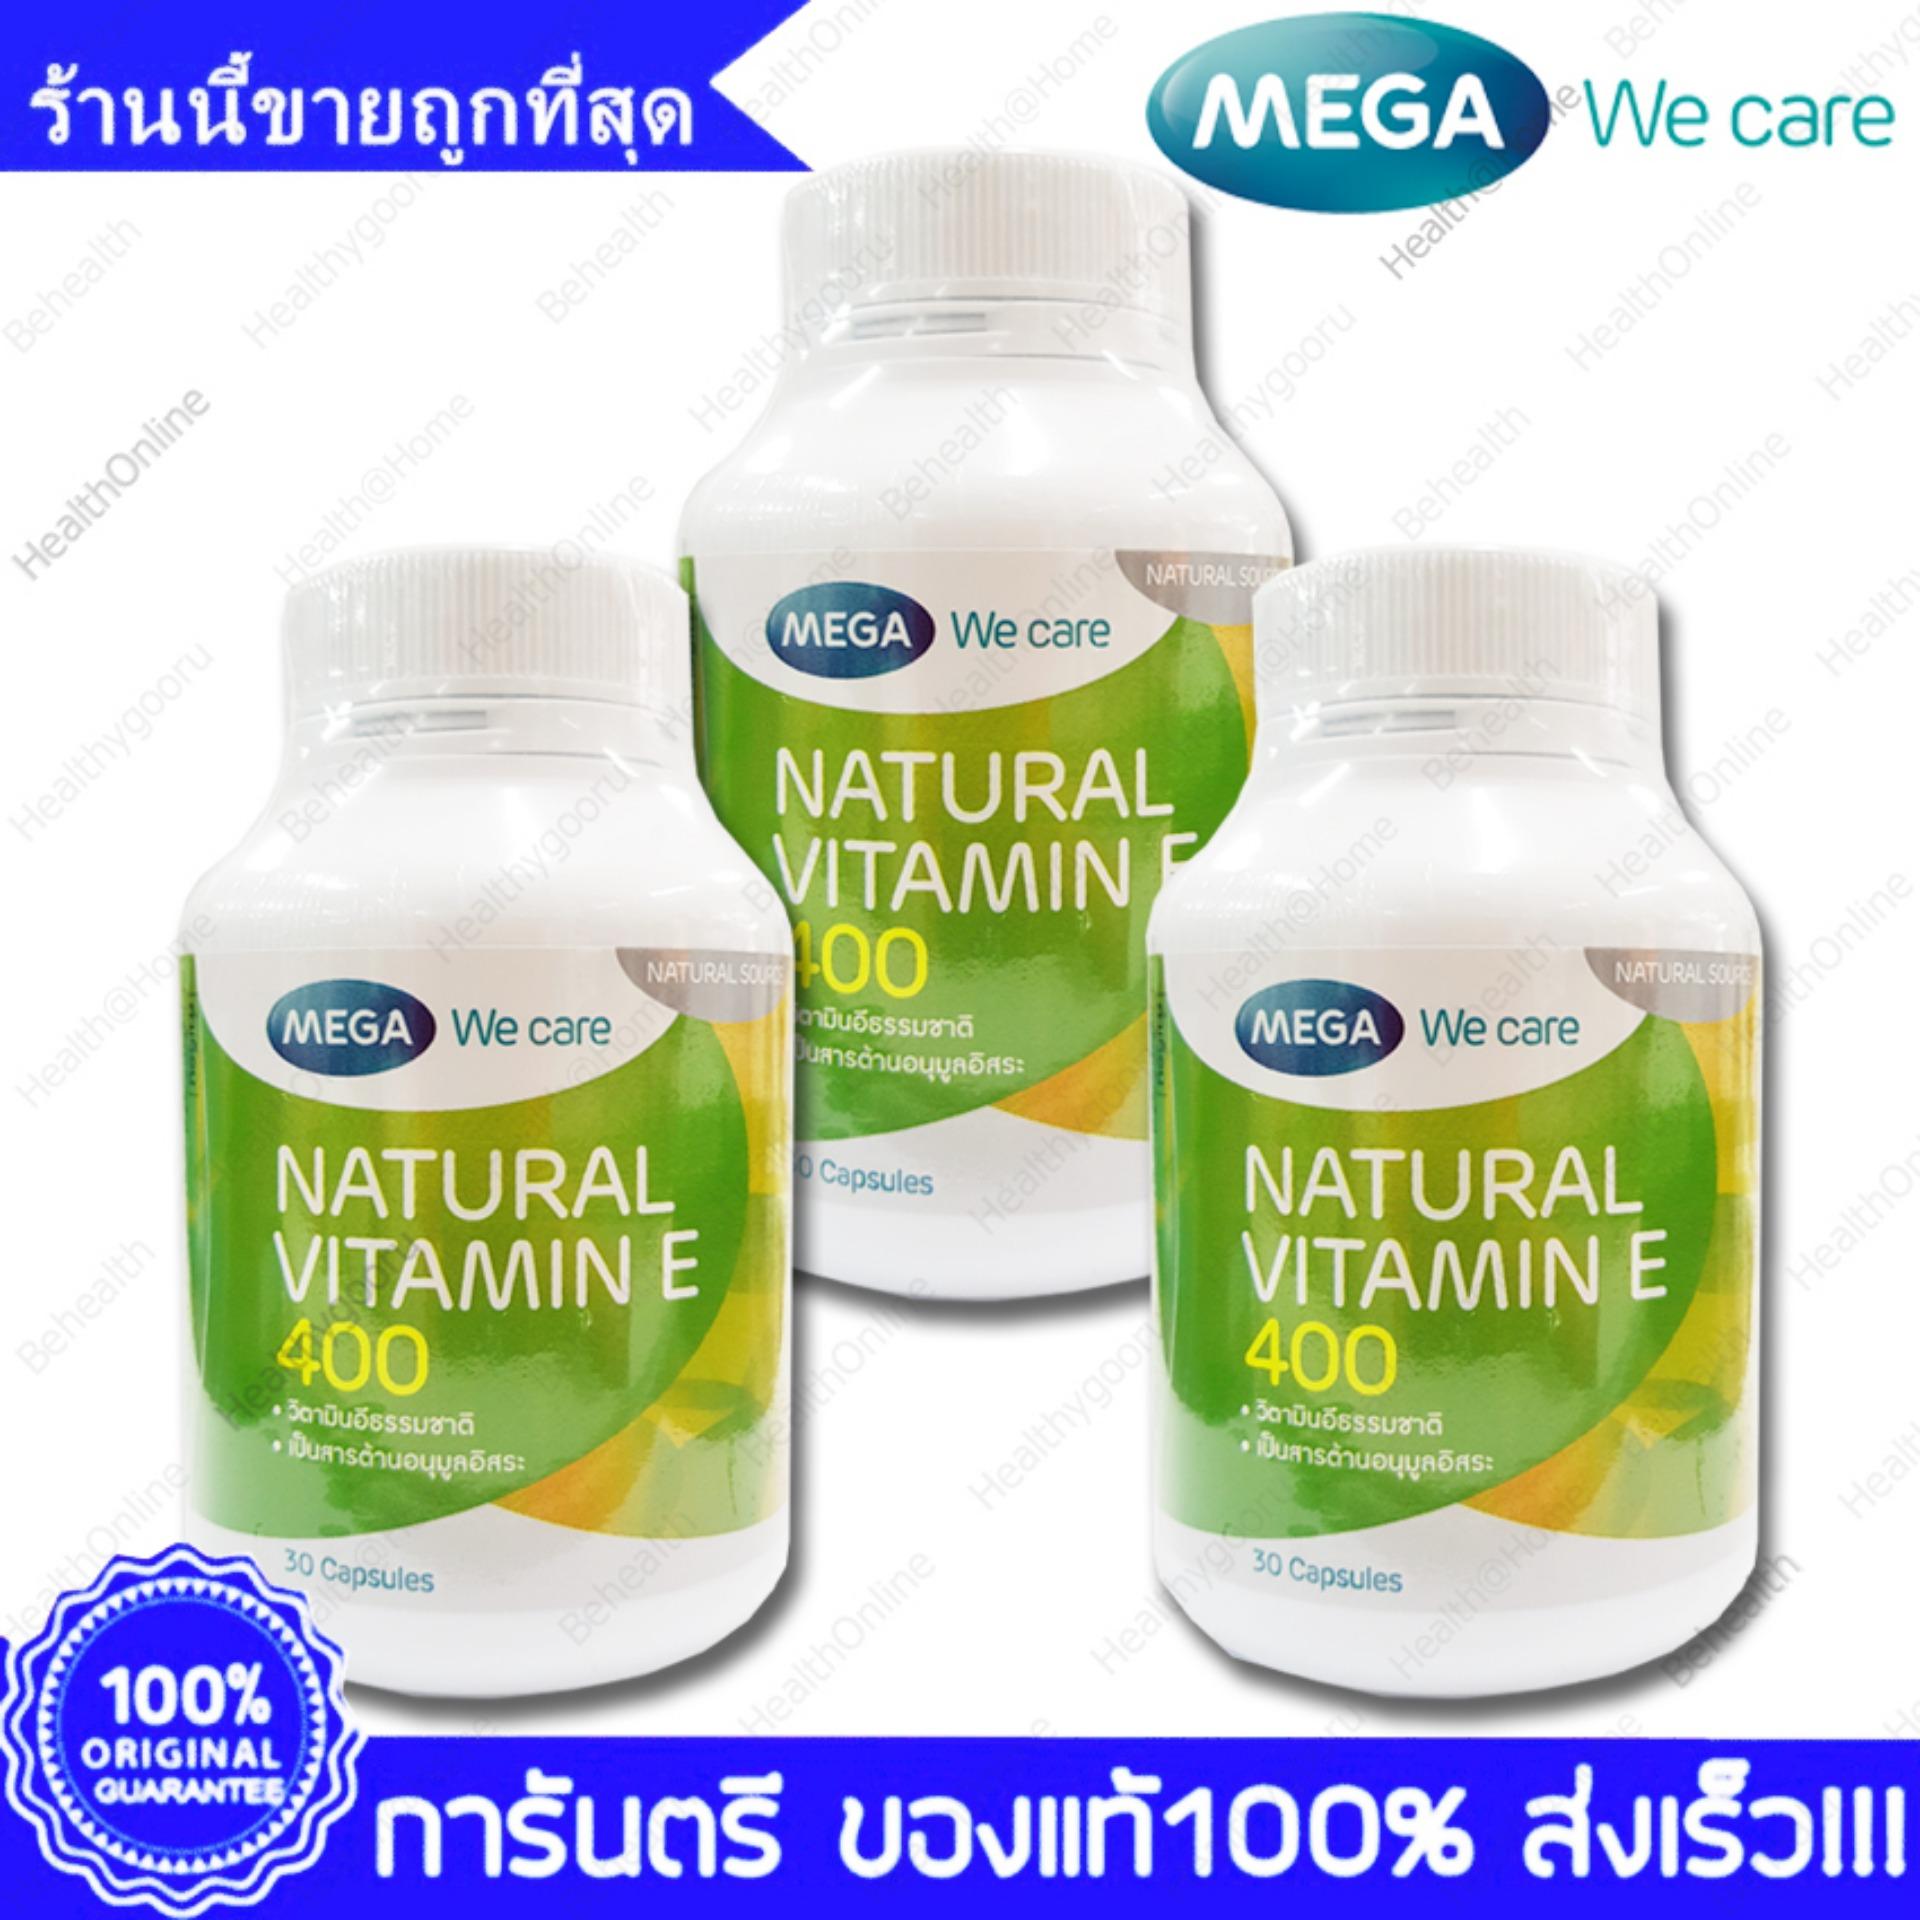 Mega We Care Natural Vitamin E 400 IU Nat E ยูนิตสากล เมก้า วิตามิน อี ธรรมชาติ ลดริ้วรอย 30 แคปซูล(Capsules) X 3 ขวด(Bottles)